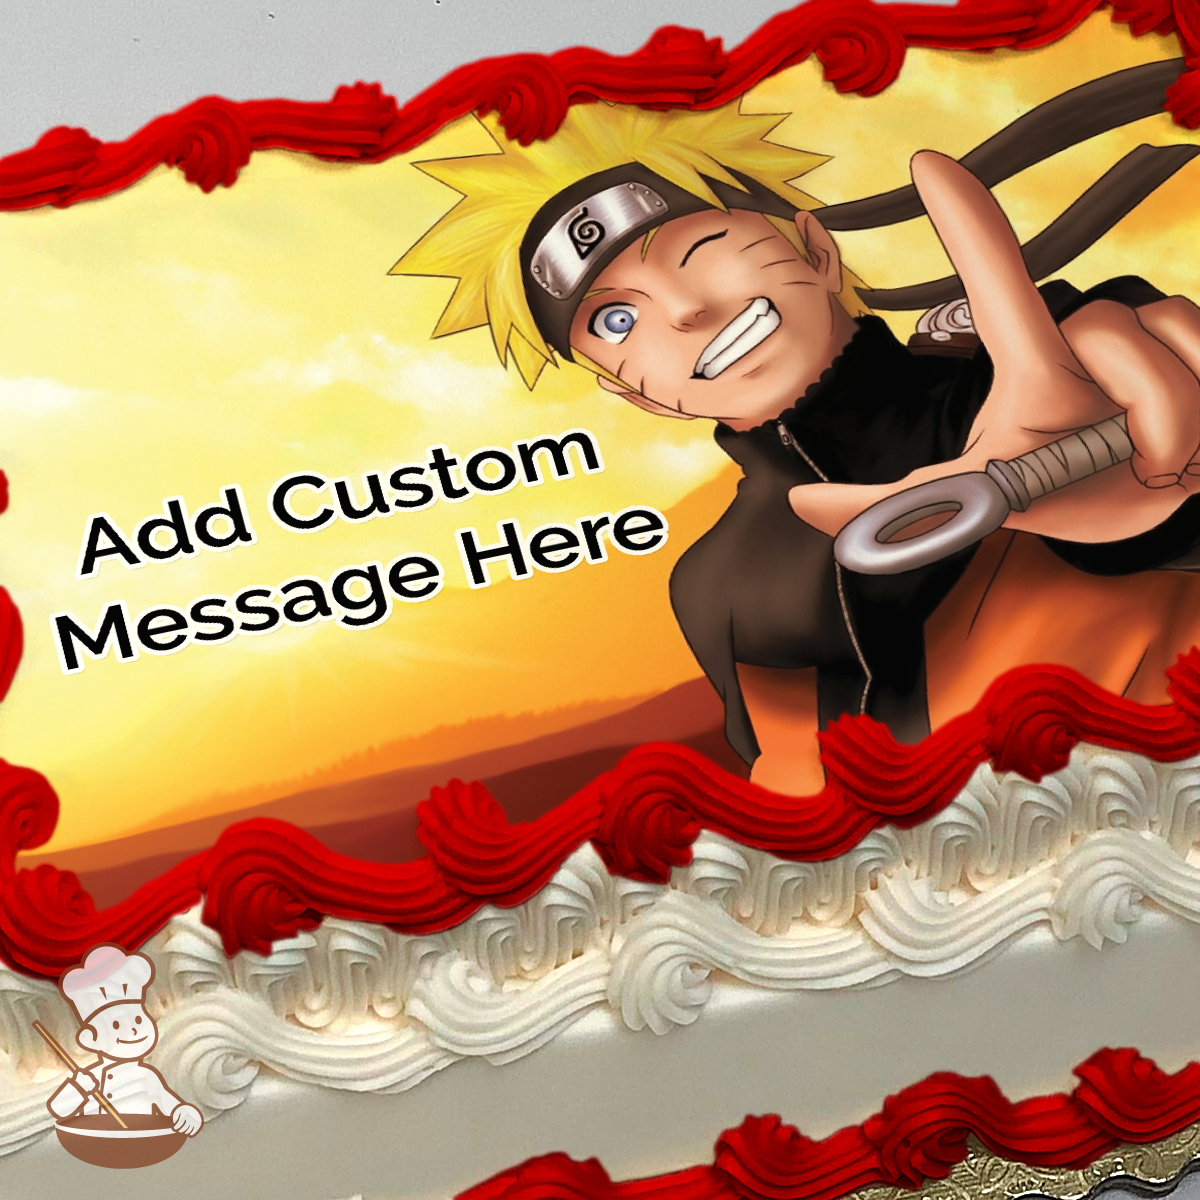 Naruto anime character, Uzumaki, printed on extra cake layer and decorated on rectangle sheet cake.